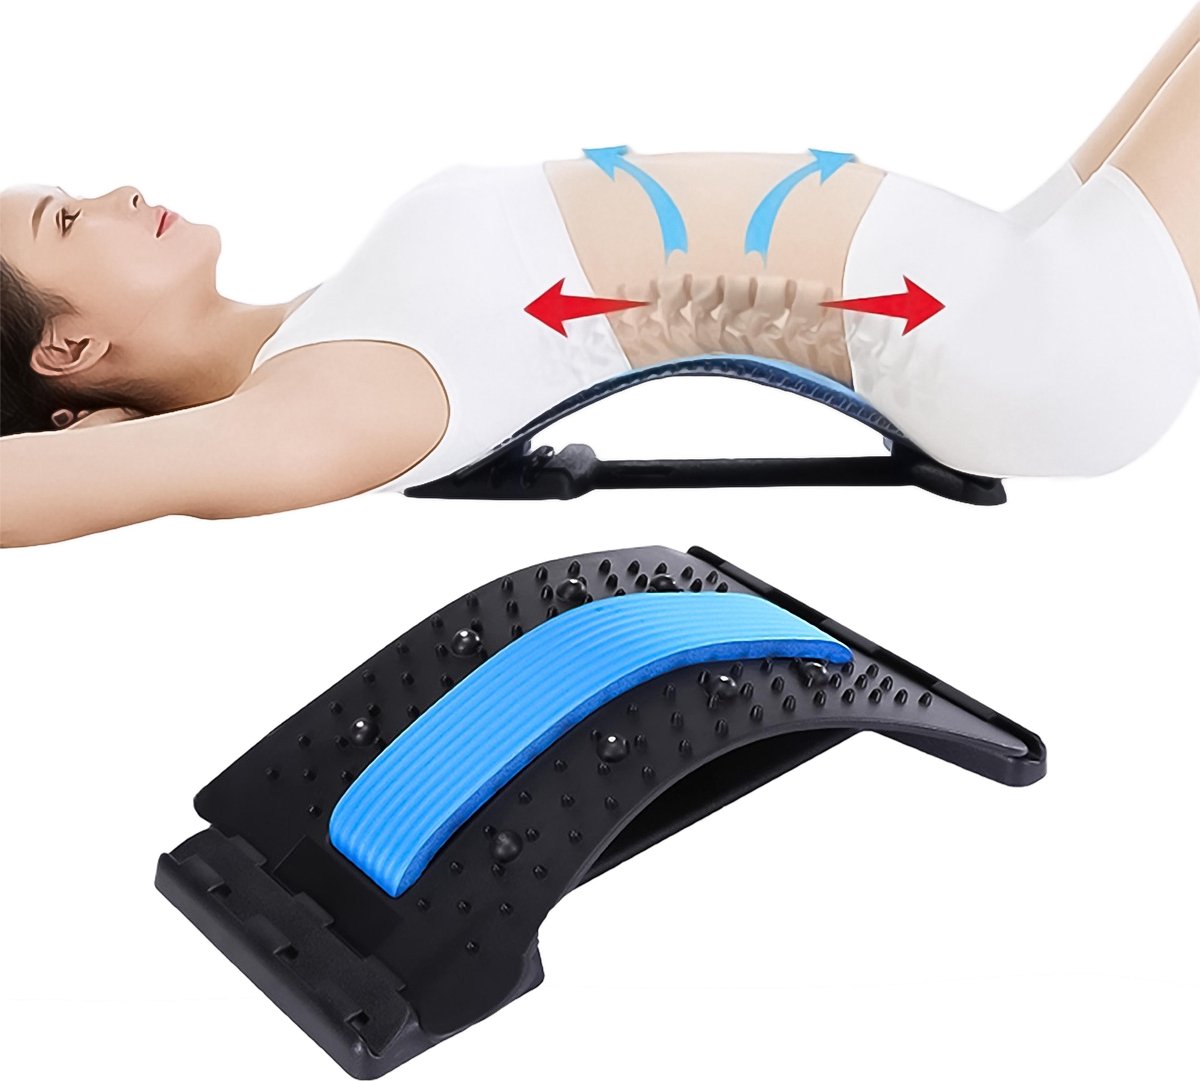 Backstretcher - Houding Corrector - voor Rugklachten - Rugmassage - Verstelbare Rugstretcher - Magnetische Acupunctuur - Rugtrainer - Rugstrekker - Drukpunt Massage - Postuur Correctie - Zithouding - Blauw - Merkloos